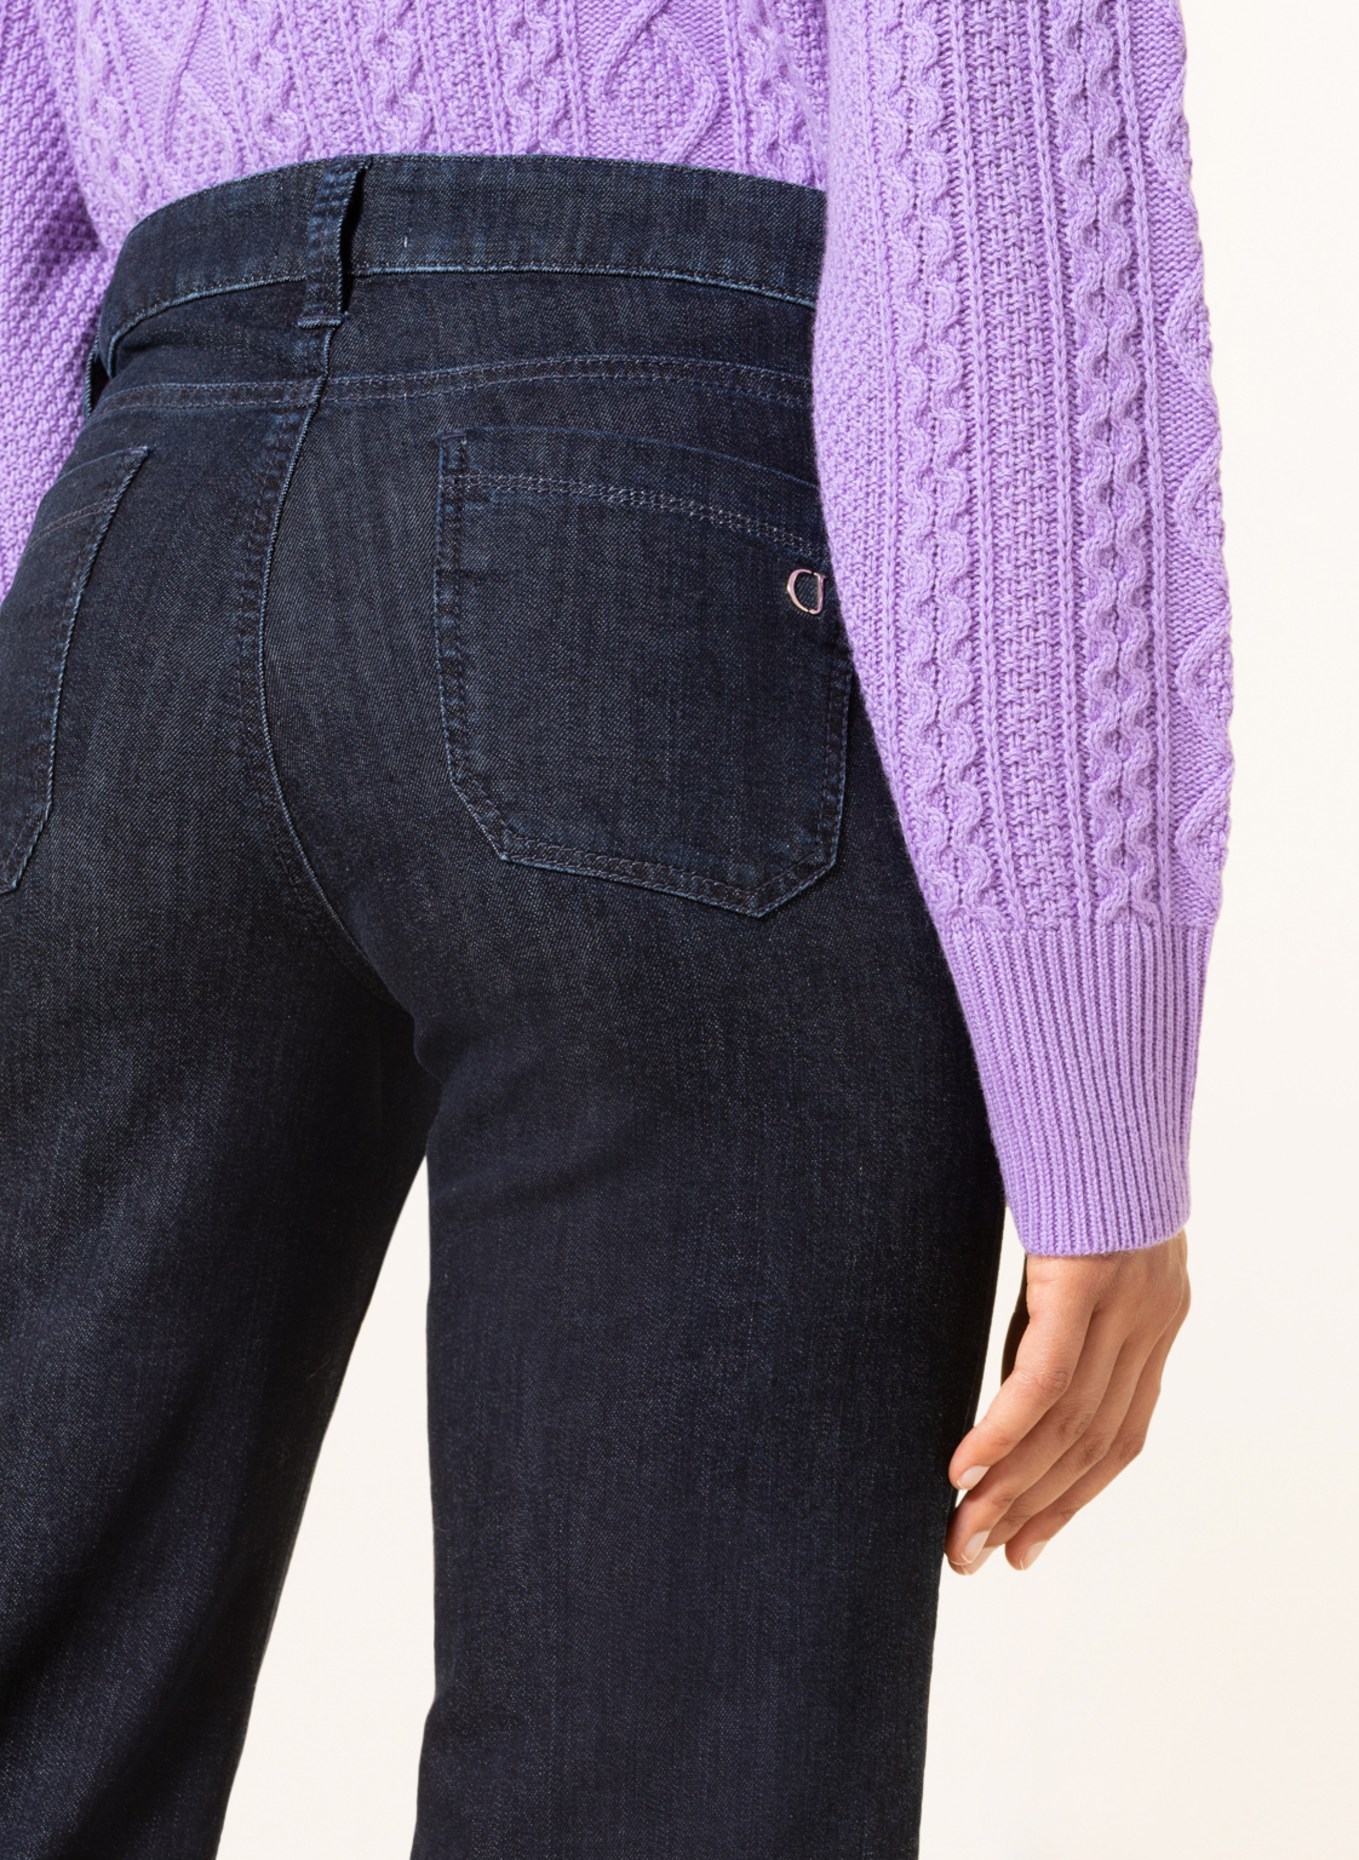 CAMBIO Jeans TESS, Farbe: 5006 modern rinsed (Bild 5)